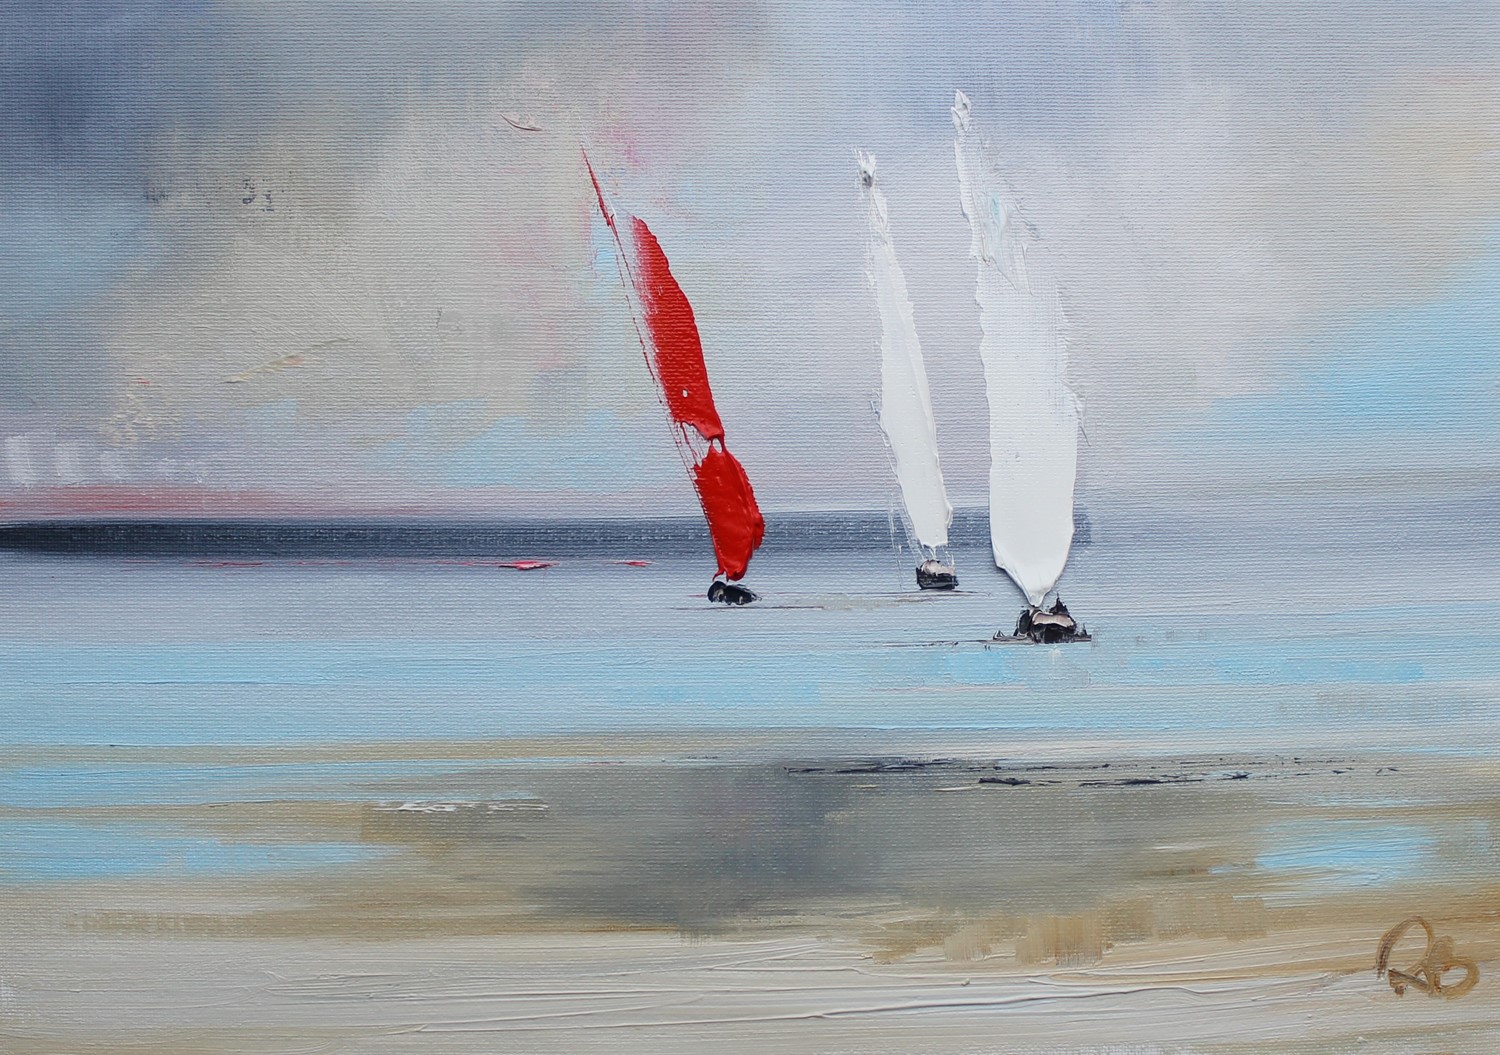 'Simply Sailing' by artist Rosanne Barr